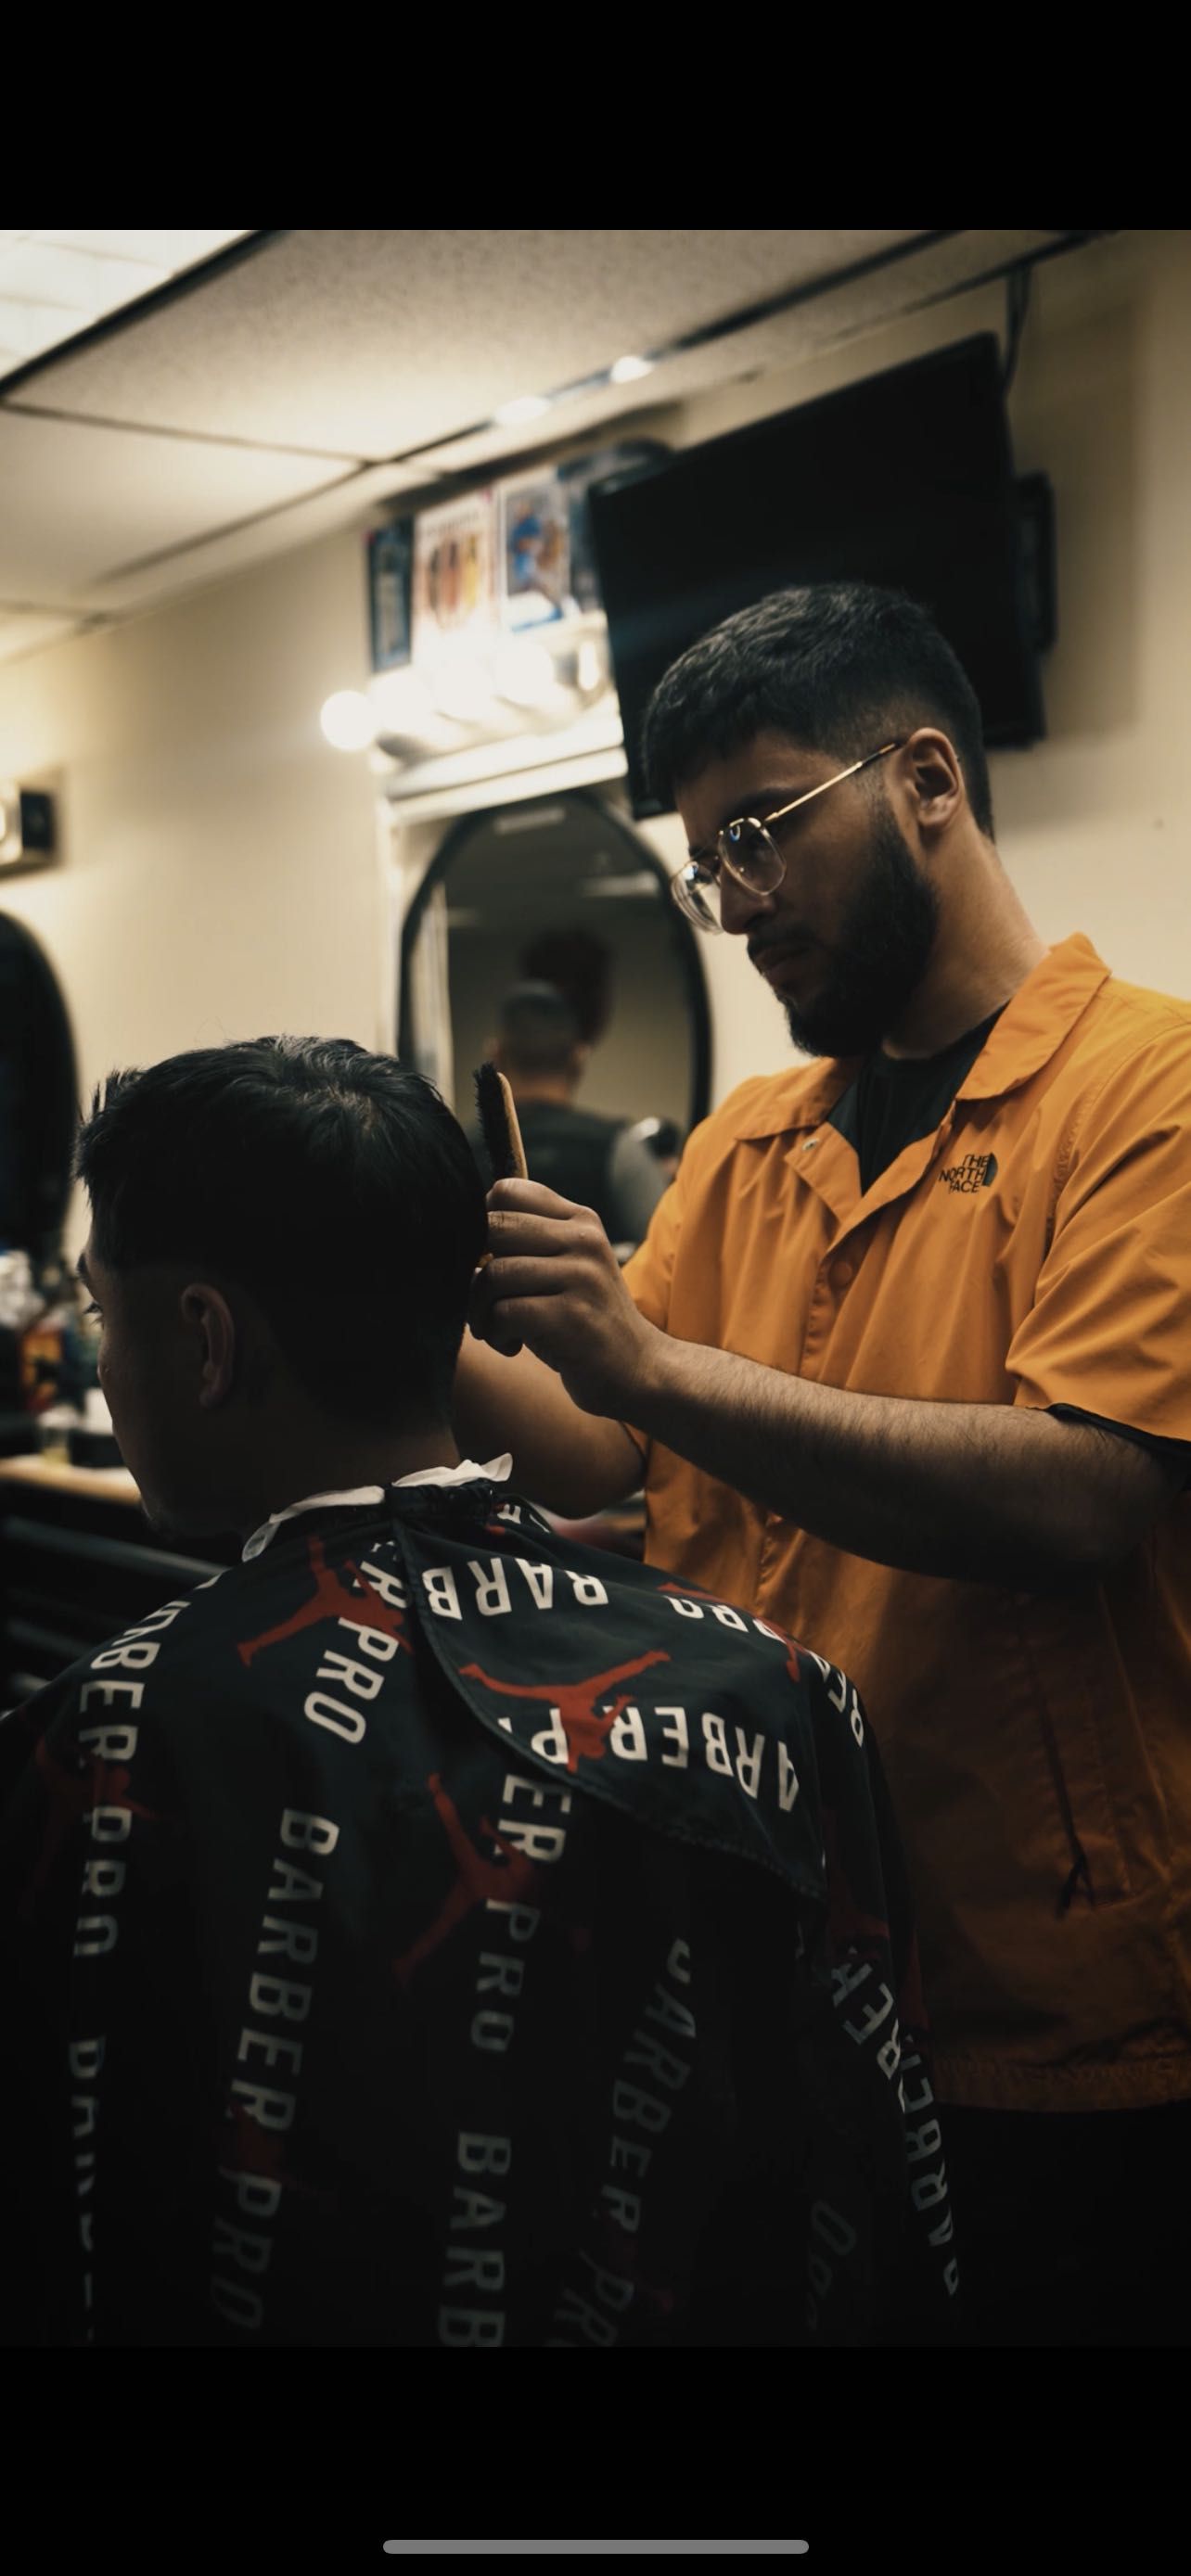 Juan @Elite Cuts Barbershop, 4342 W 63rd St, Chicago, 60629